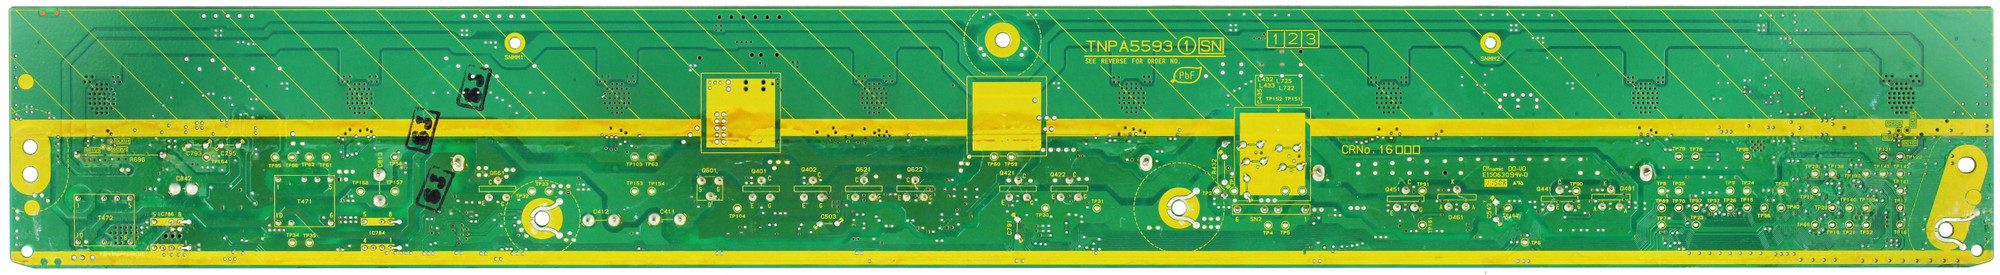 Panasonic TXNSN1RHUU (TNPA5593) SN Board for TC-P50X5/TC-P50XT50